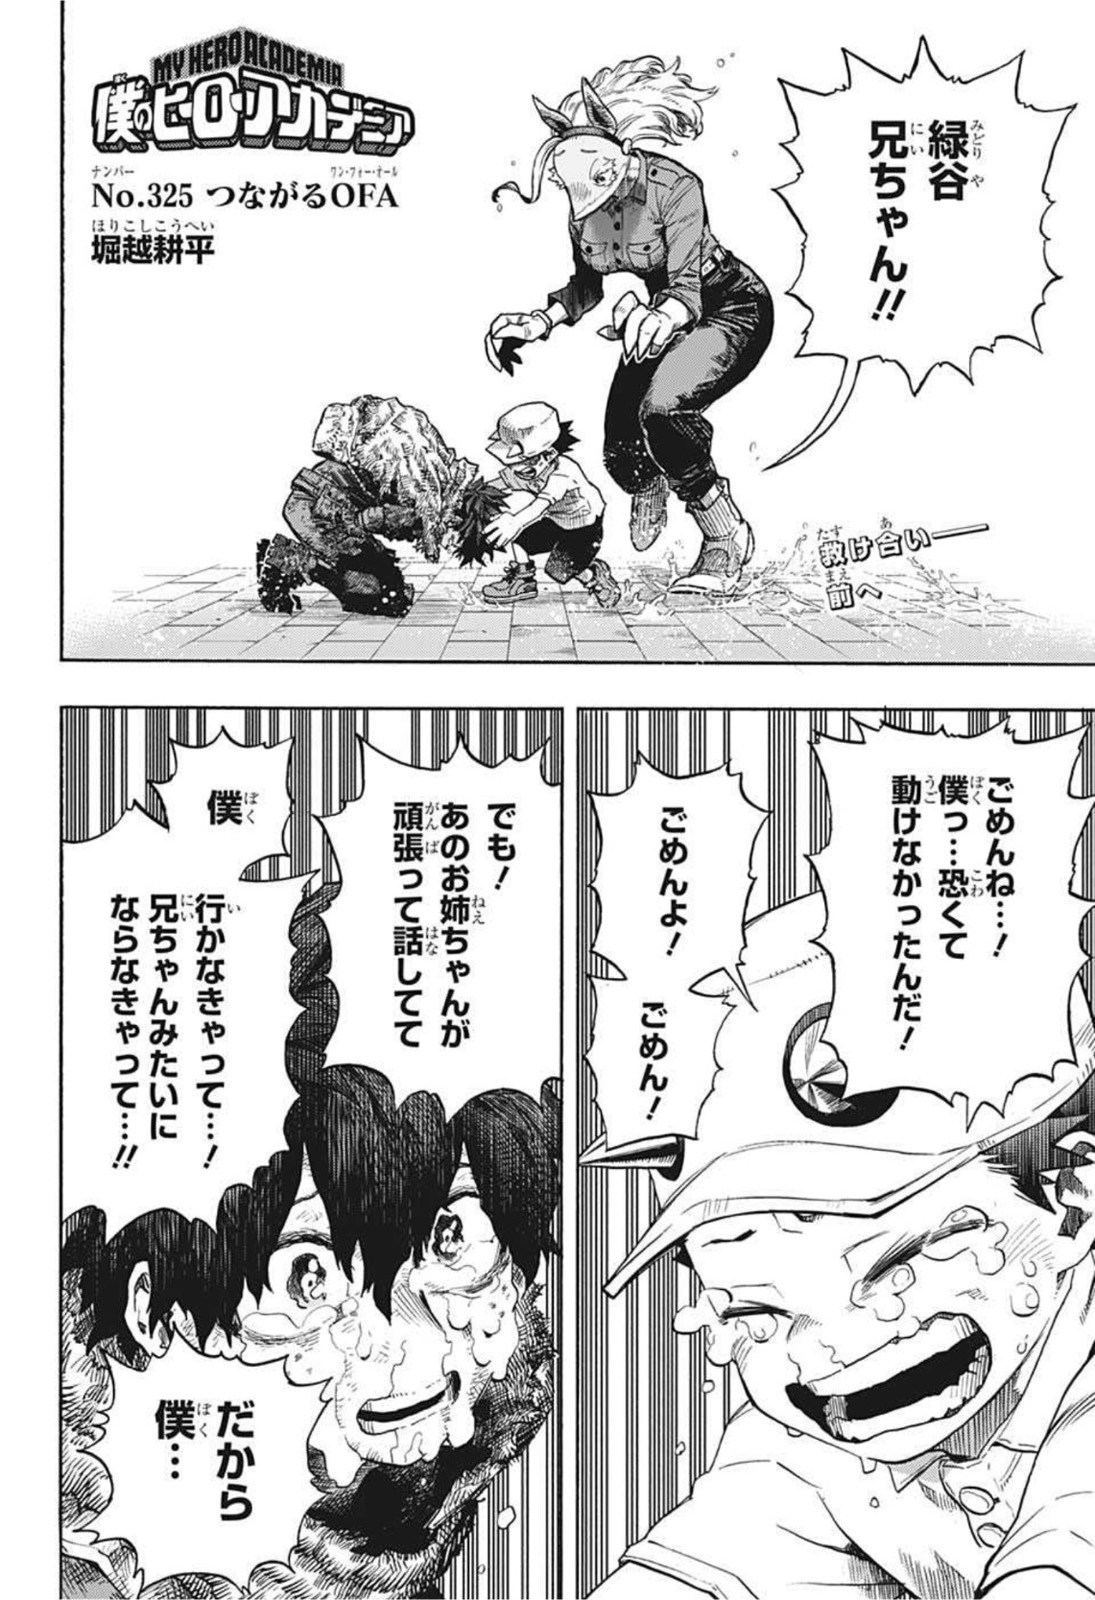 Boku no Hero Academia - Chapter 325 - Page 2